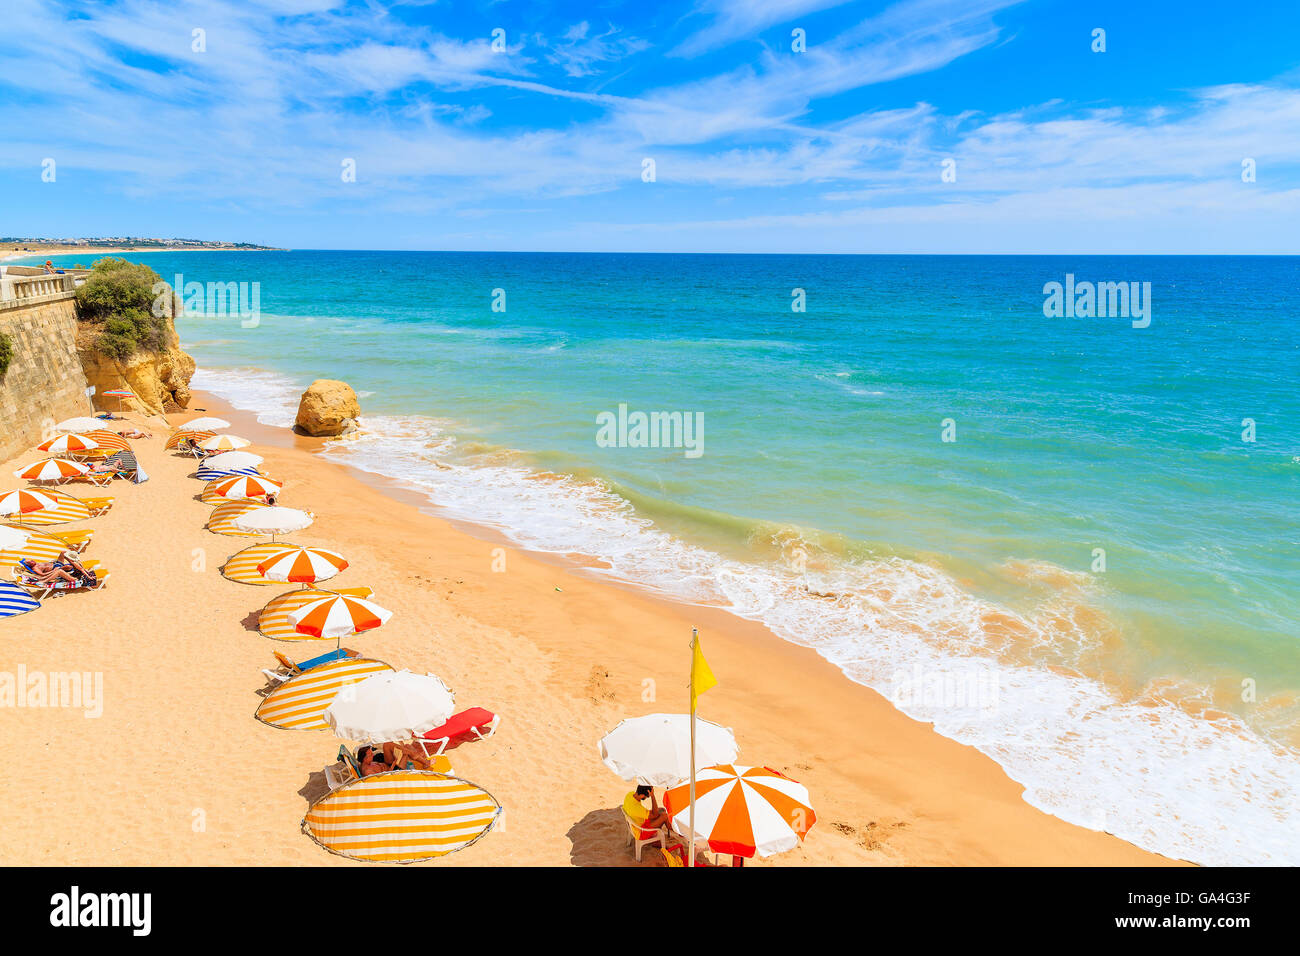 A view of beautiful sandy beach in Armacao de Pera seaside town, Algarve region, Portugal Stock Photo